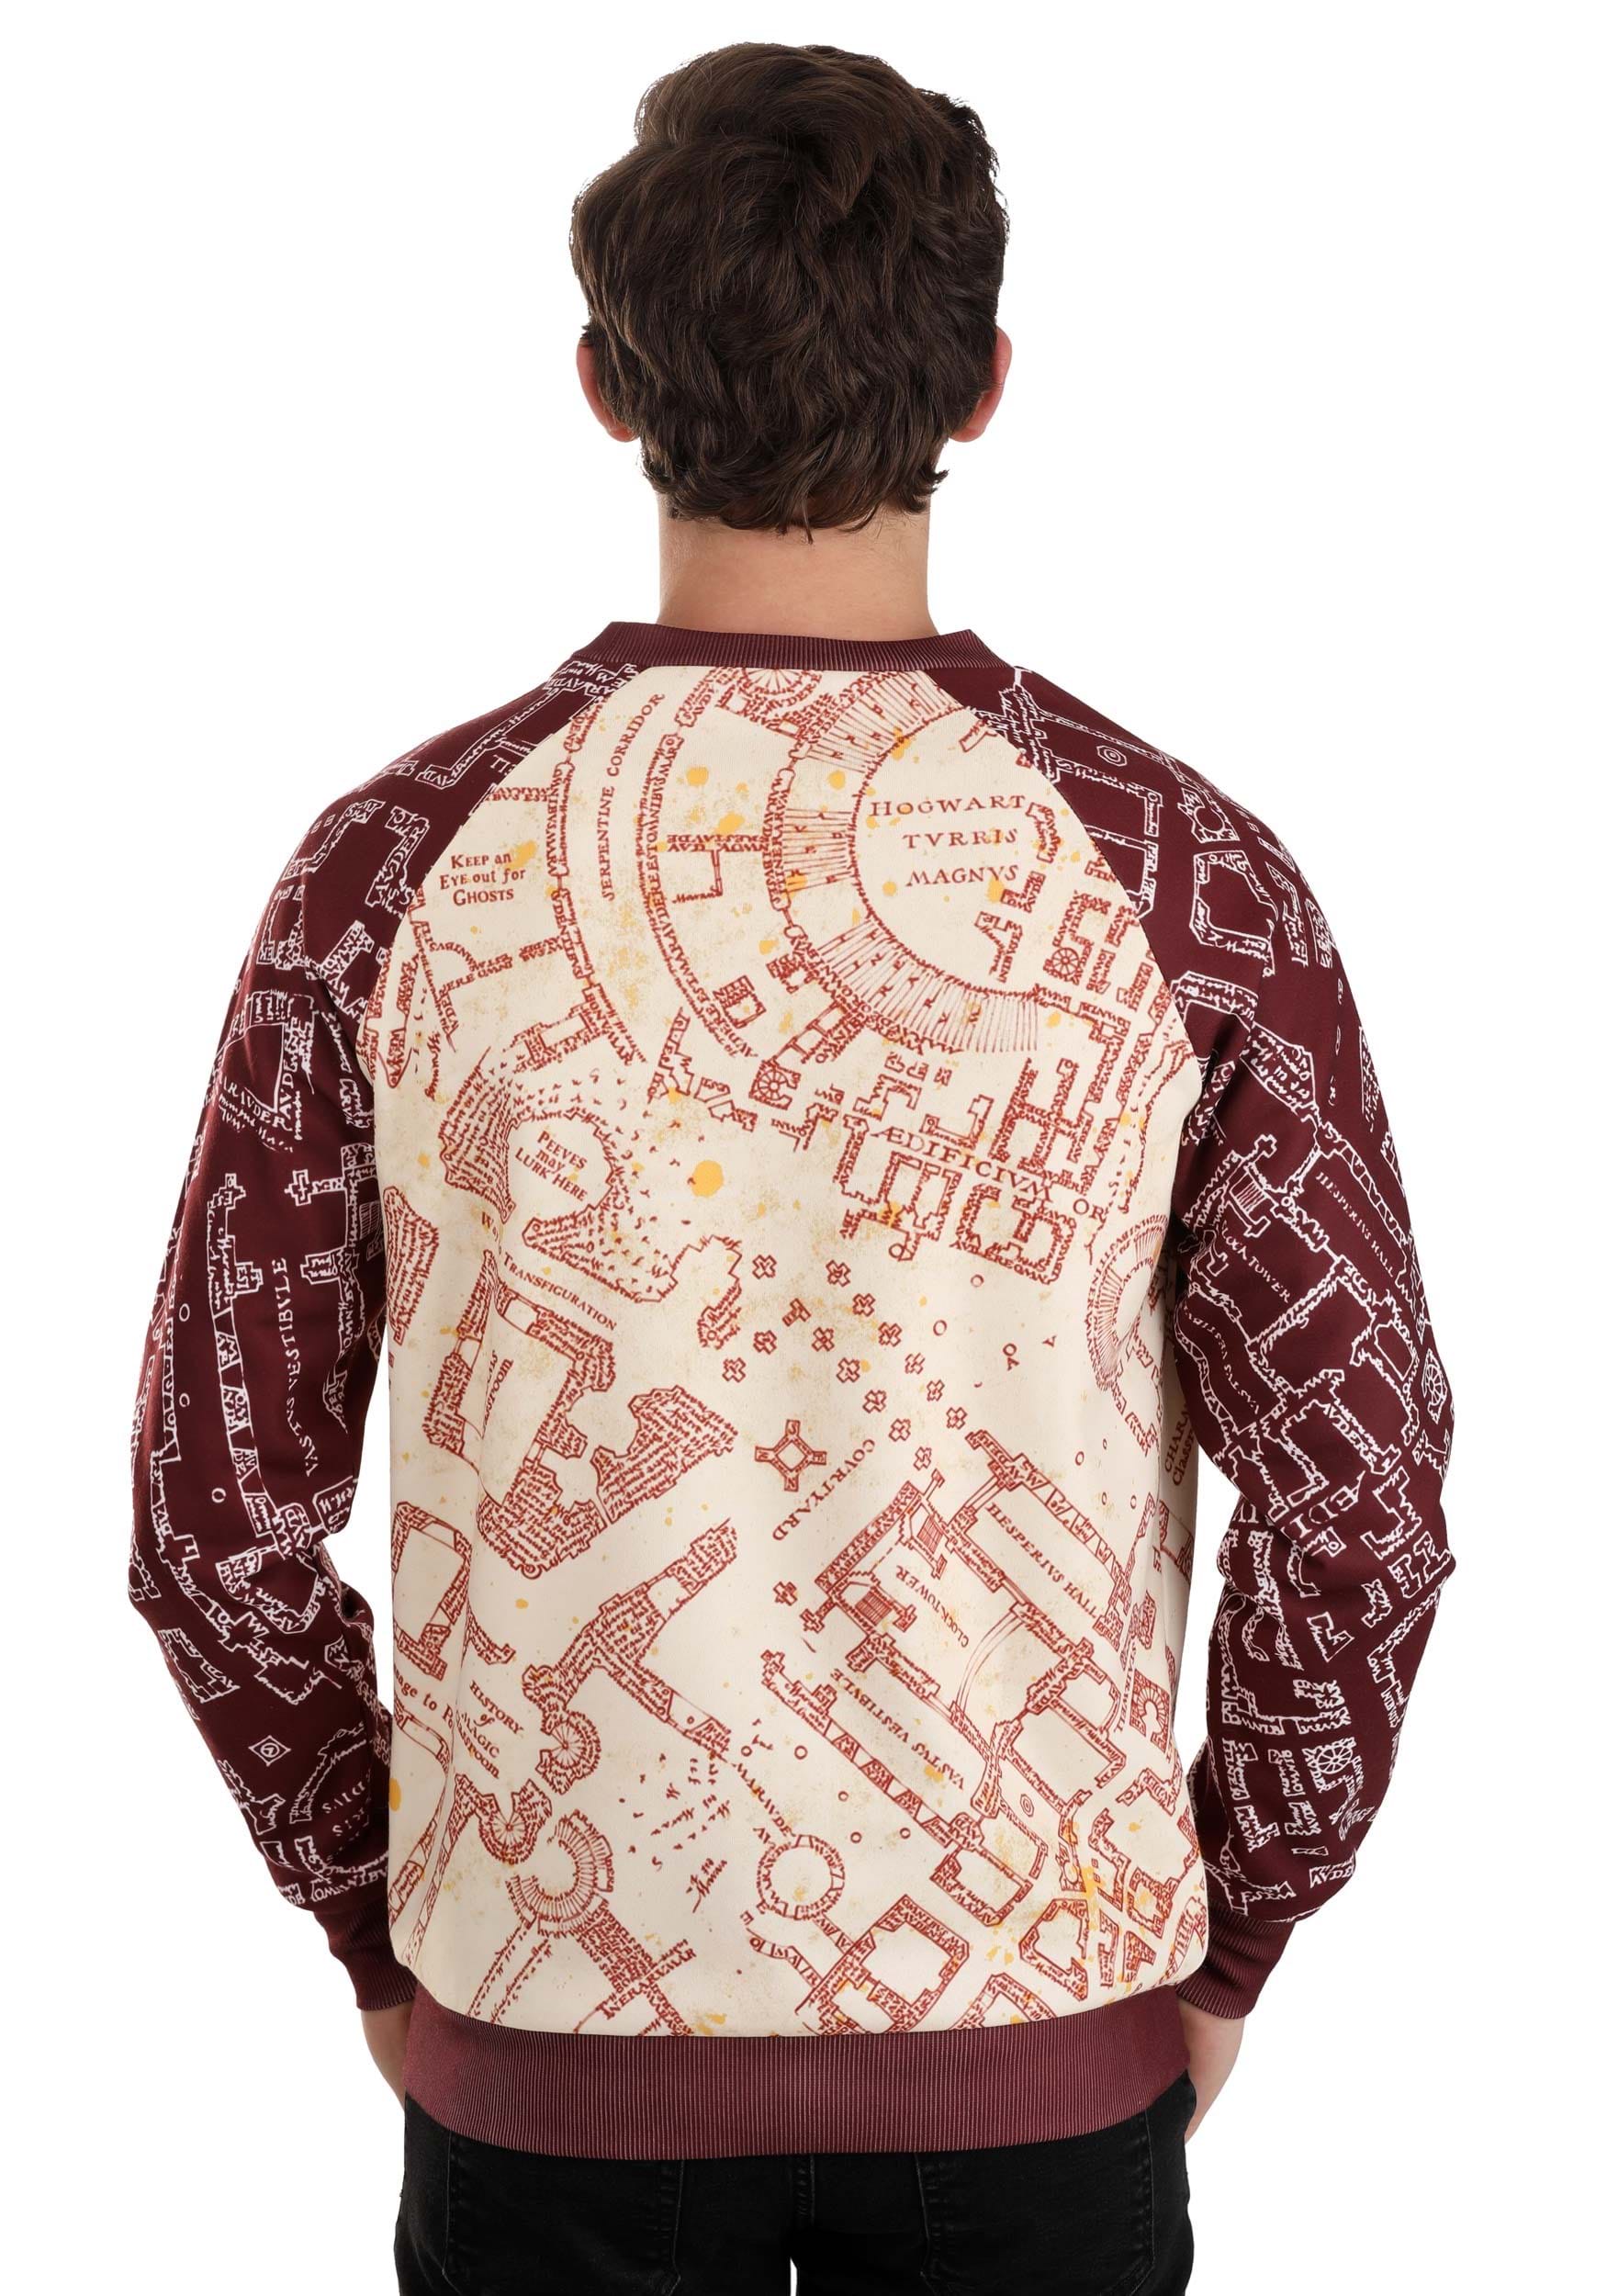 Adult HP Marauder's Map Sweatshirt , Harry Potter Gifts